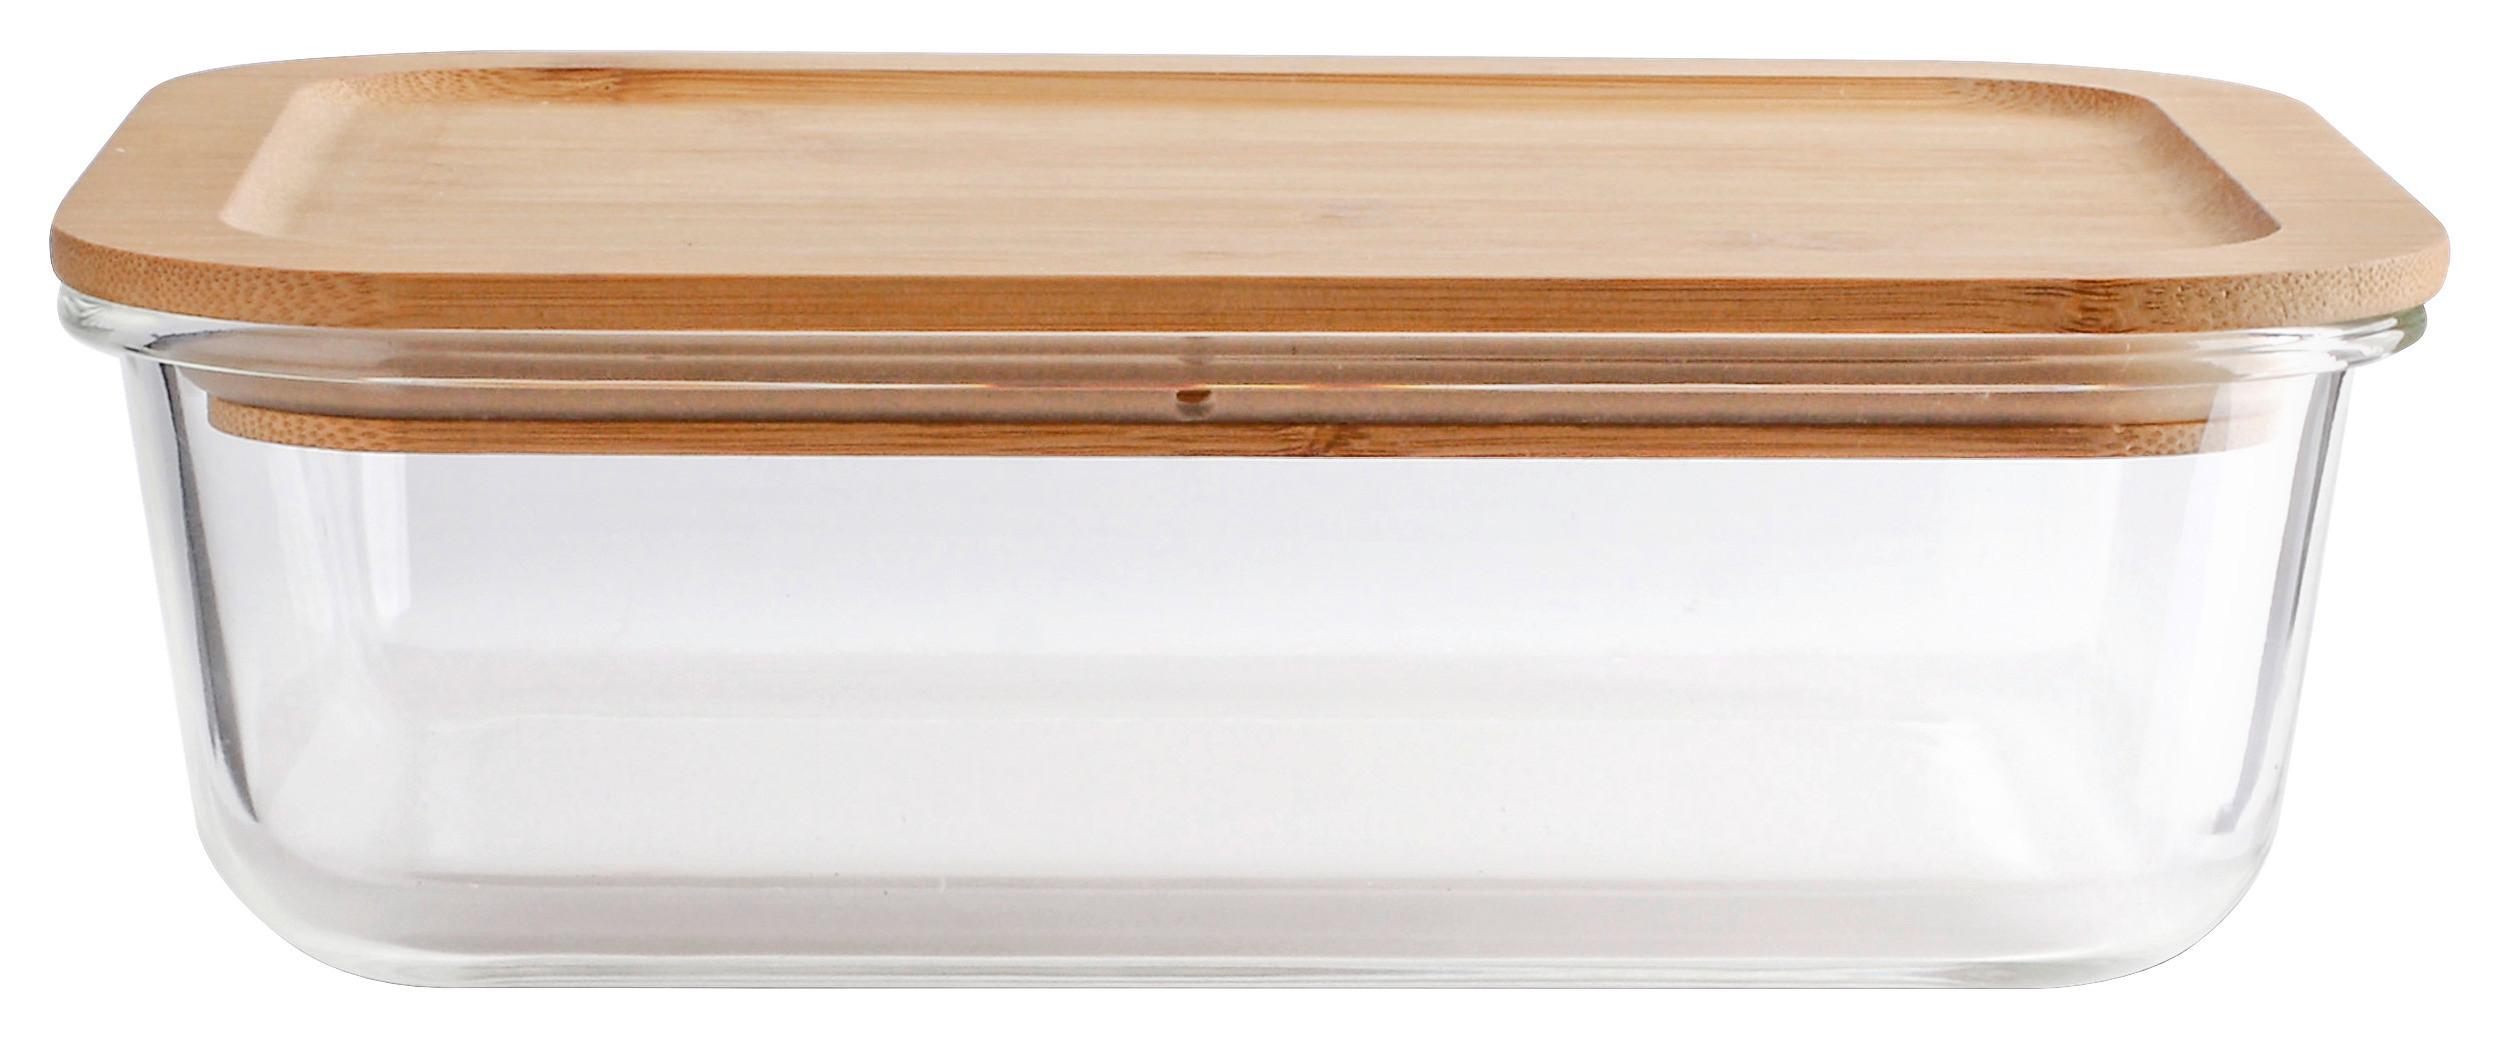 Krabička Na Potraviny Annegret - 1,1l - průhledné/čiré, dřevo/sklo (22,2/16,5/7,2cm) - Zandiara